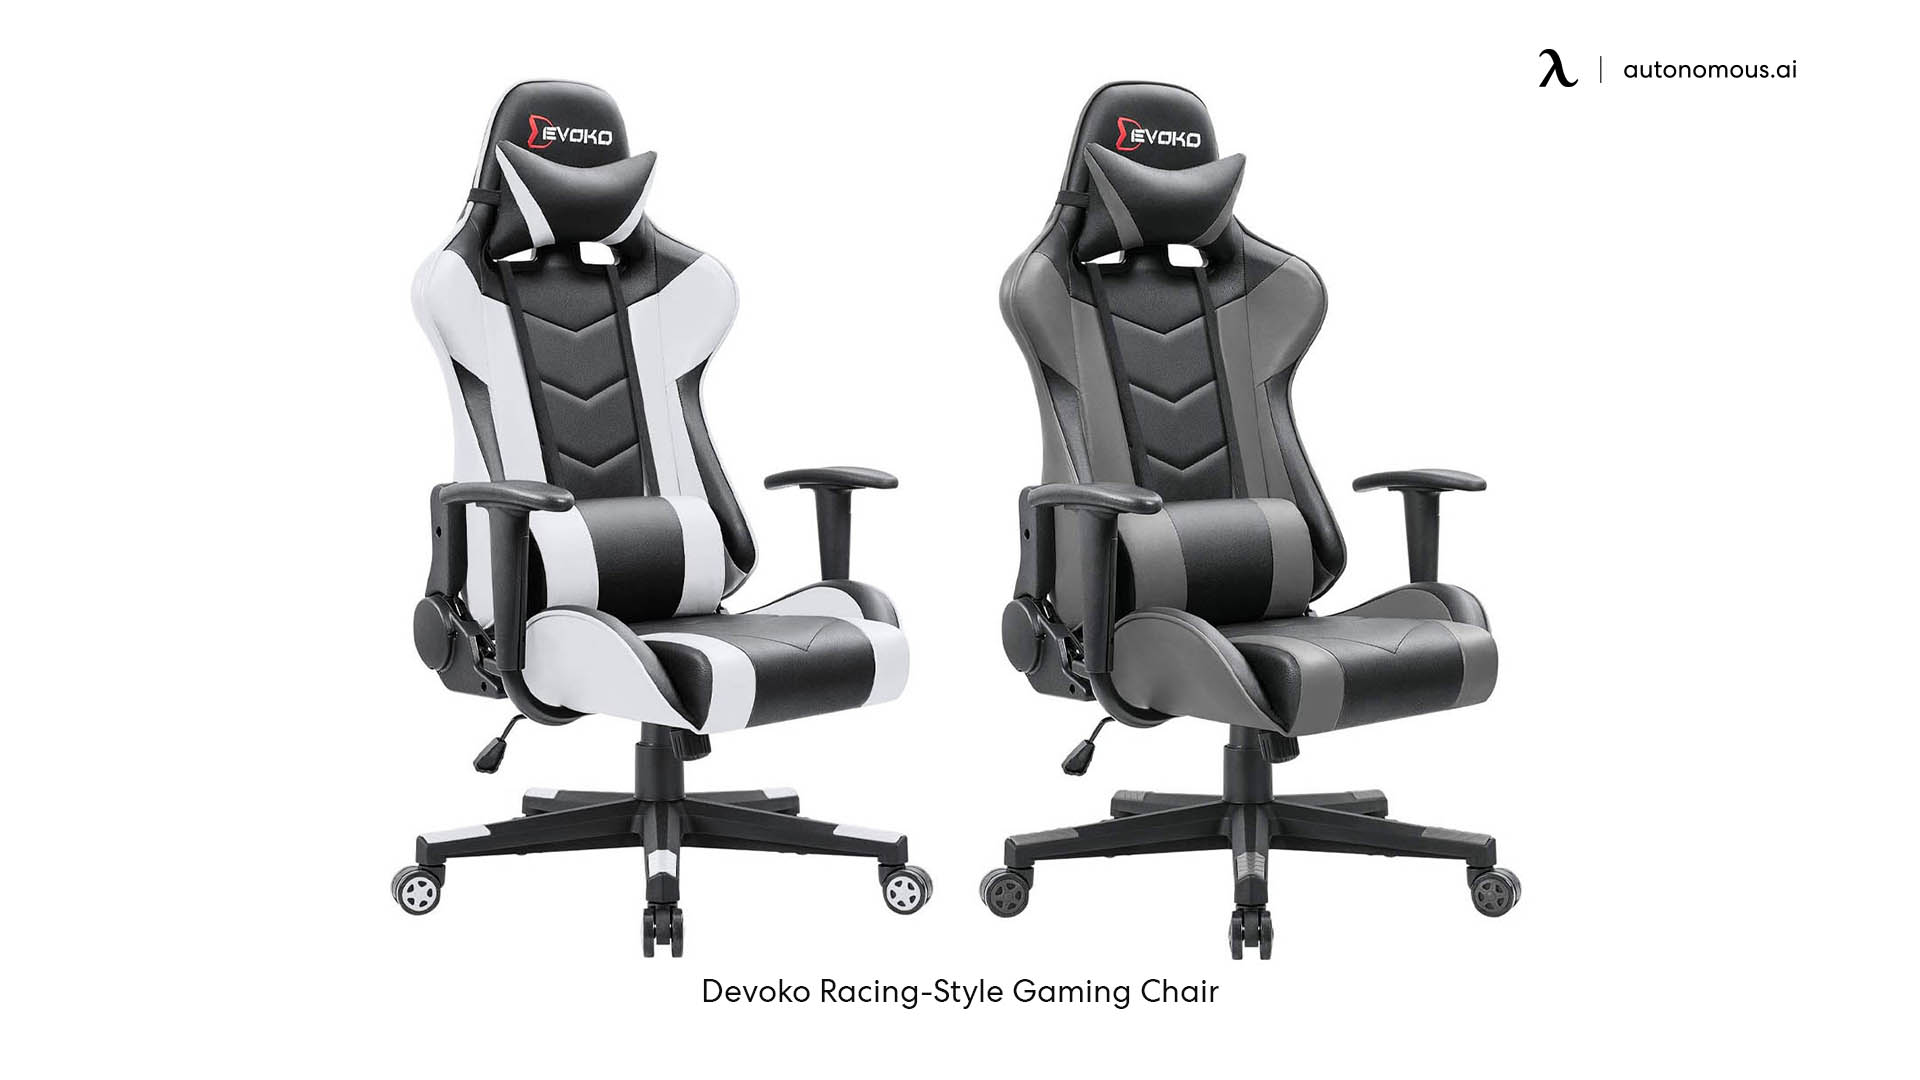 Devoko Racing-Style Gaming Chair